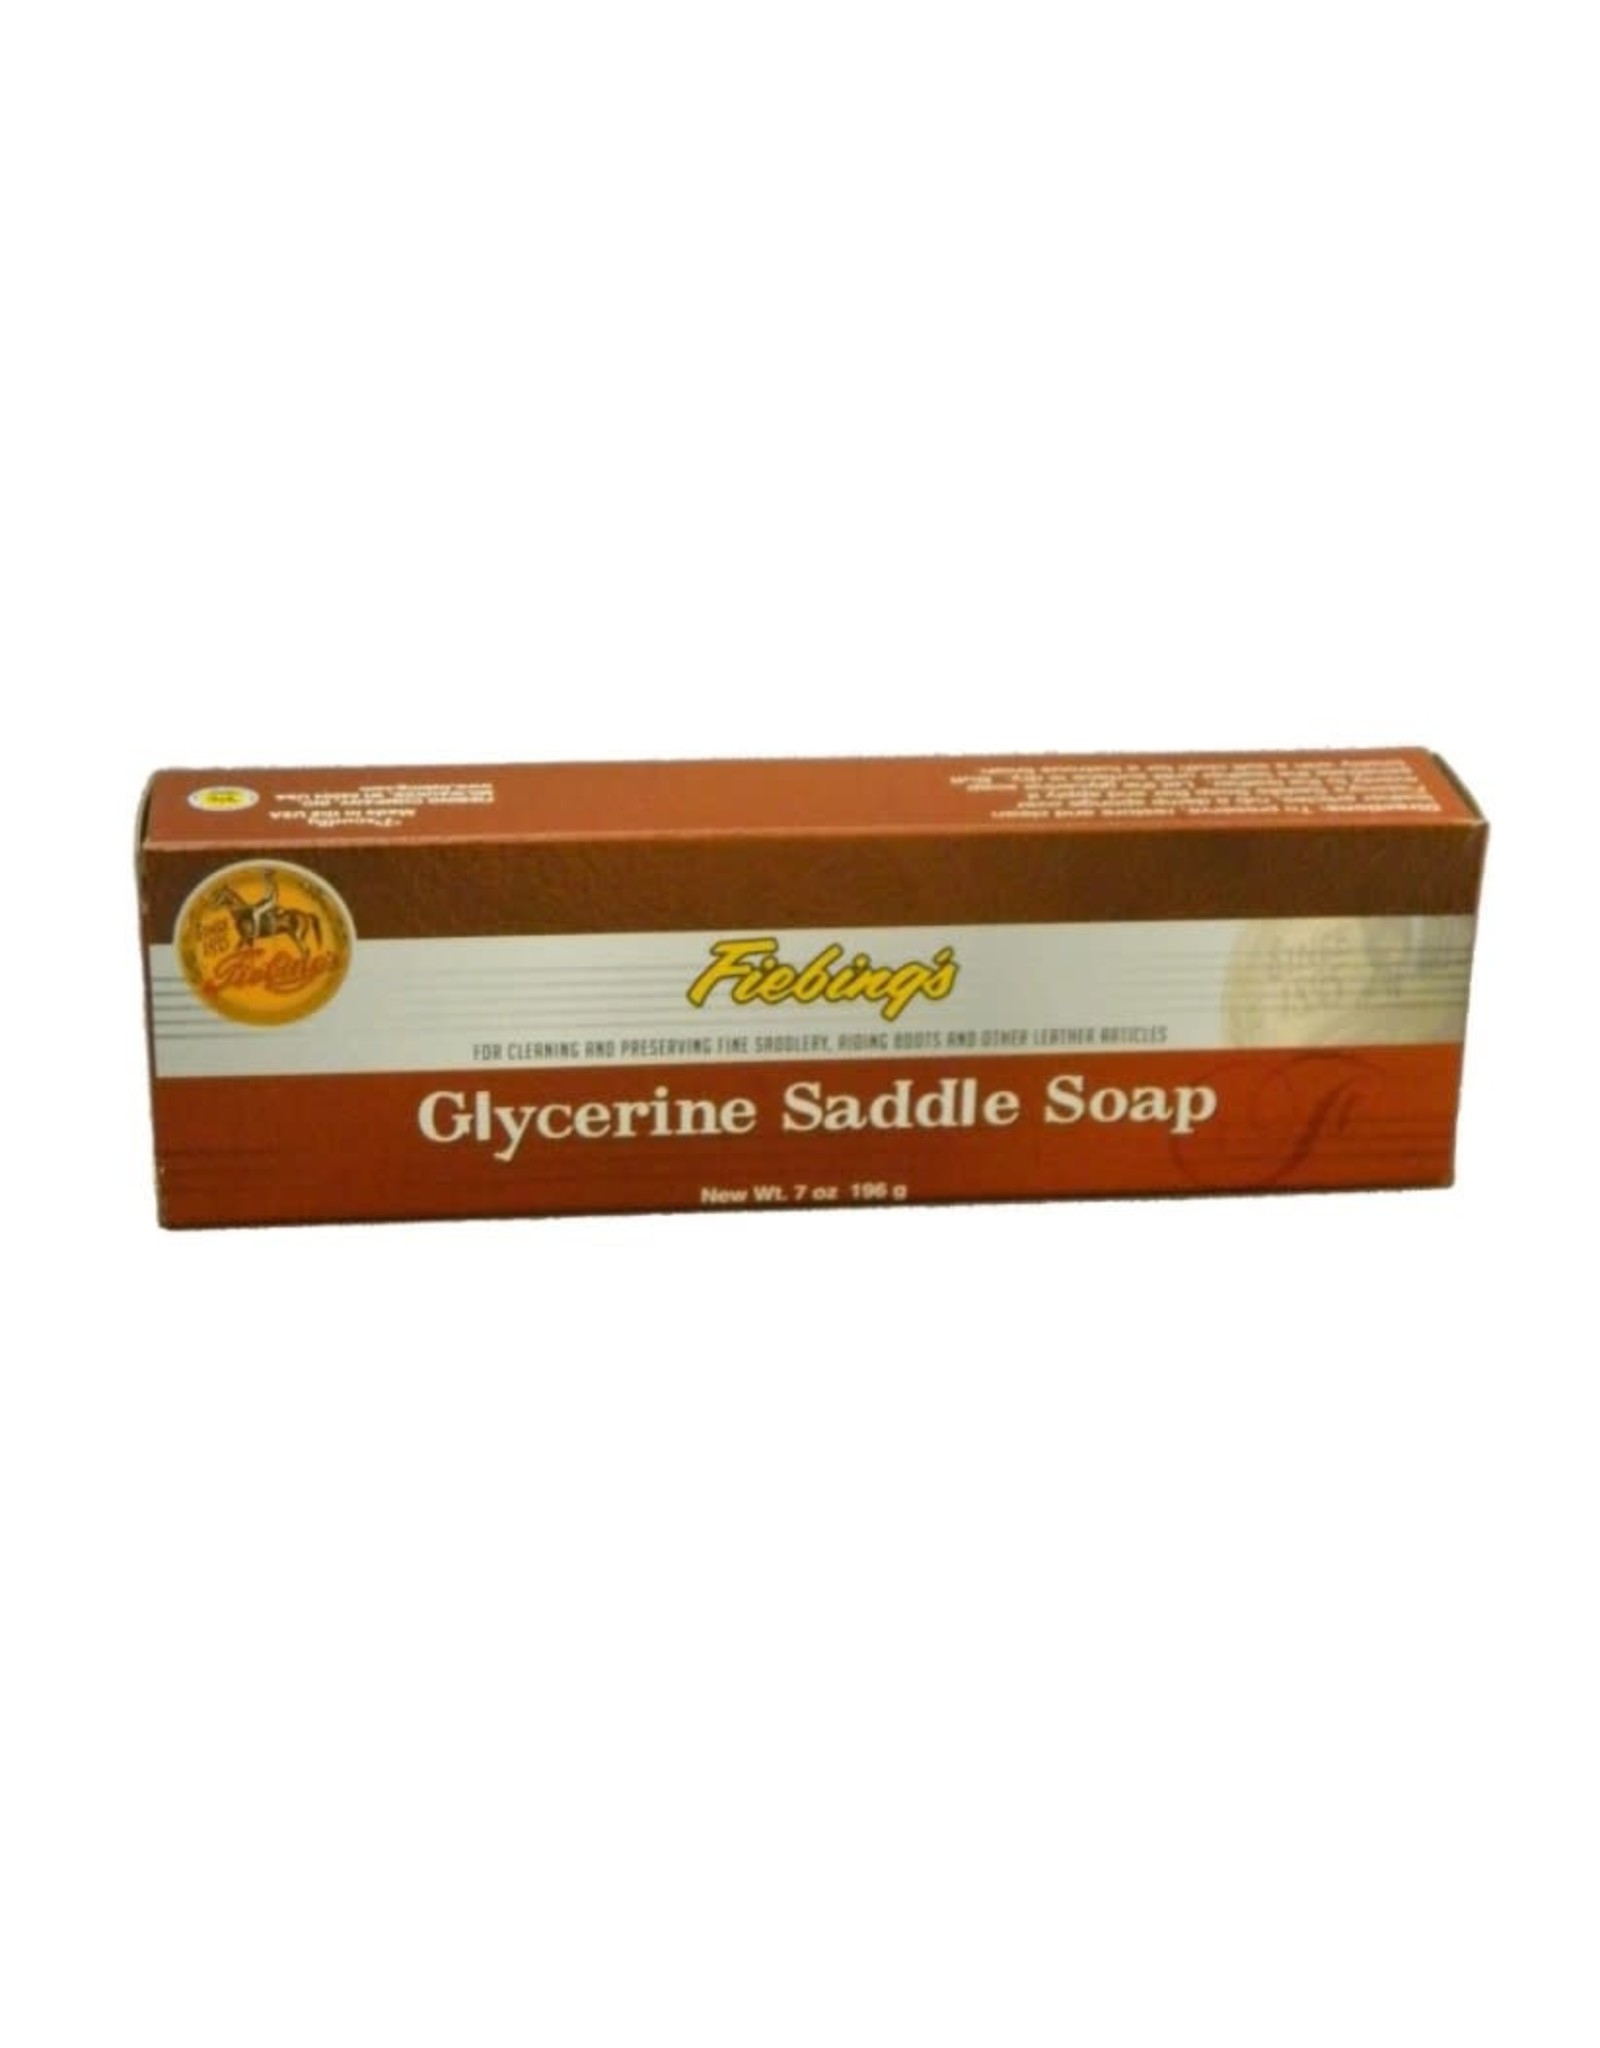 Fiebings Glycerine Saddle Soap Bar 